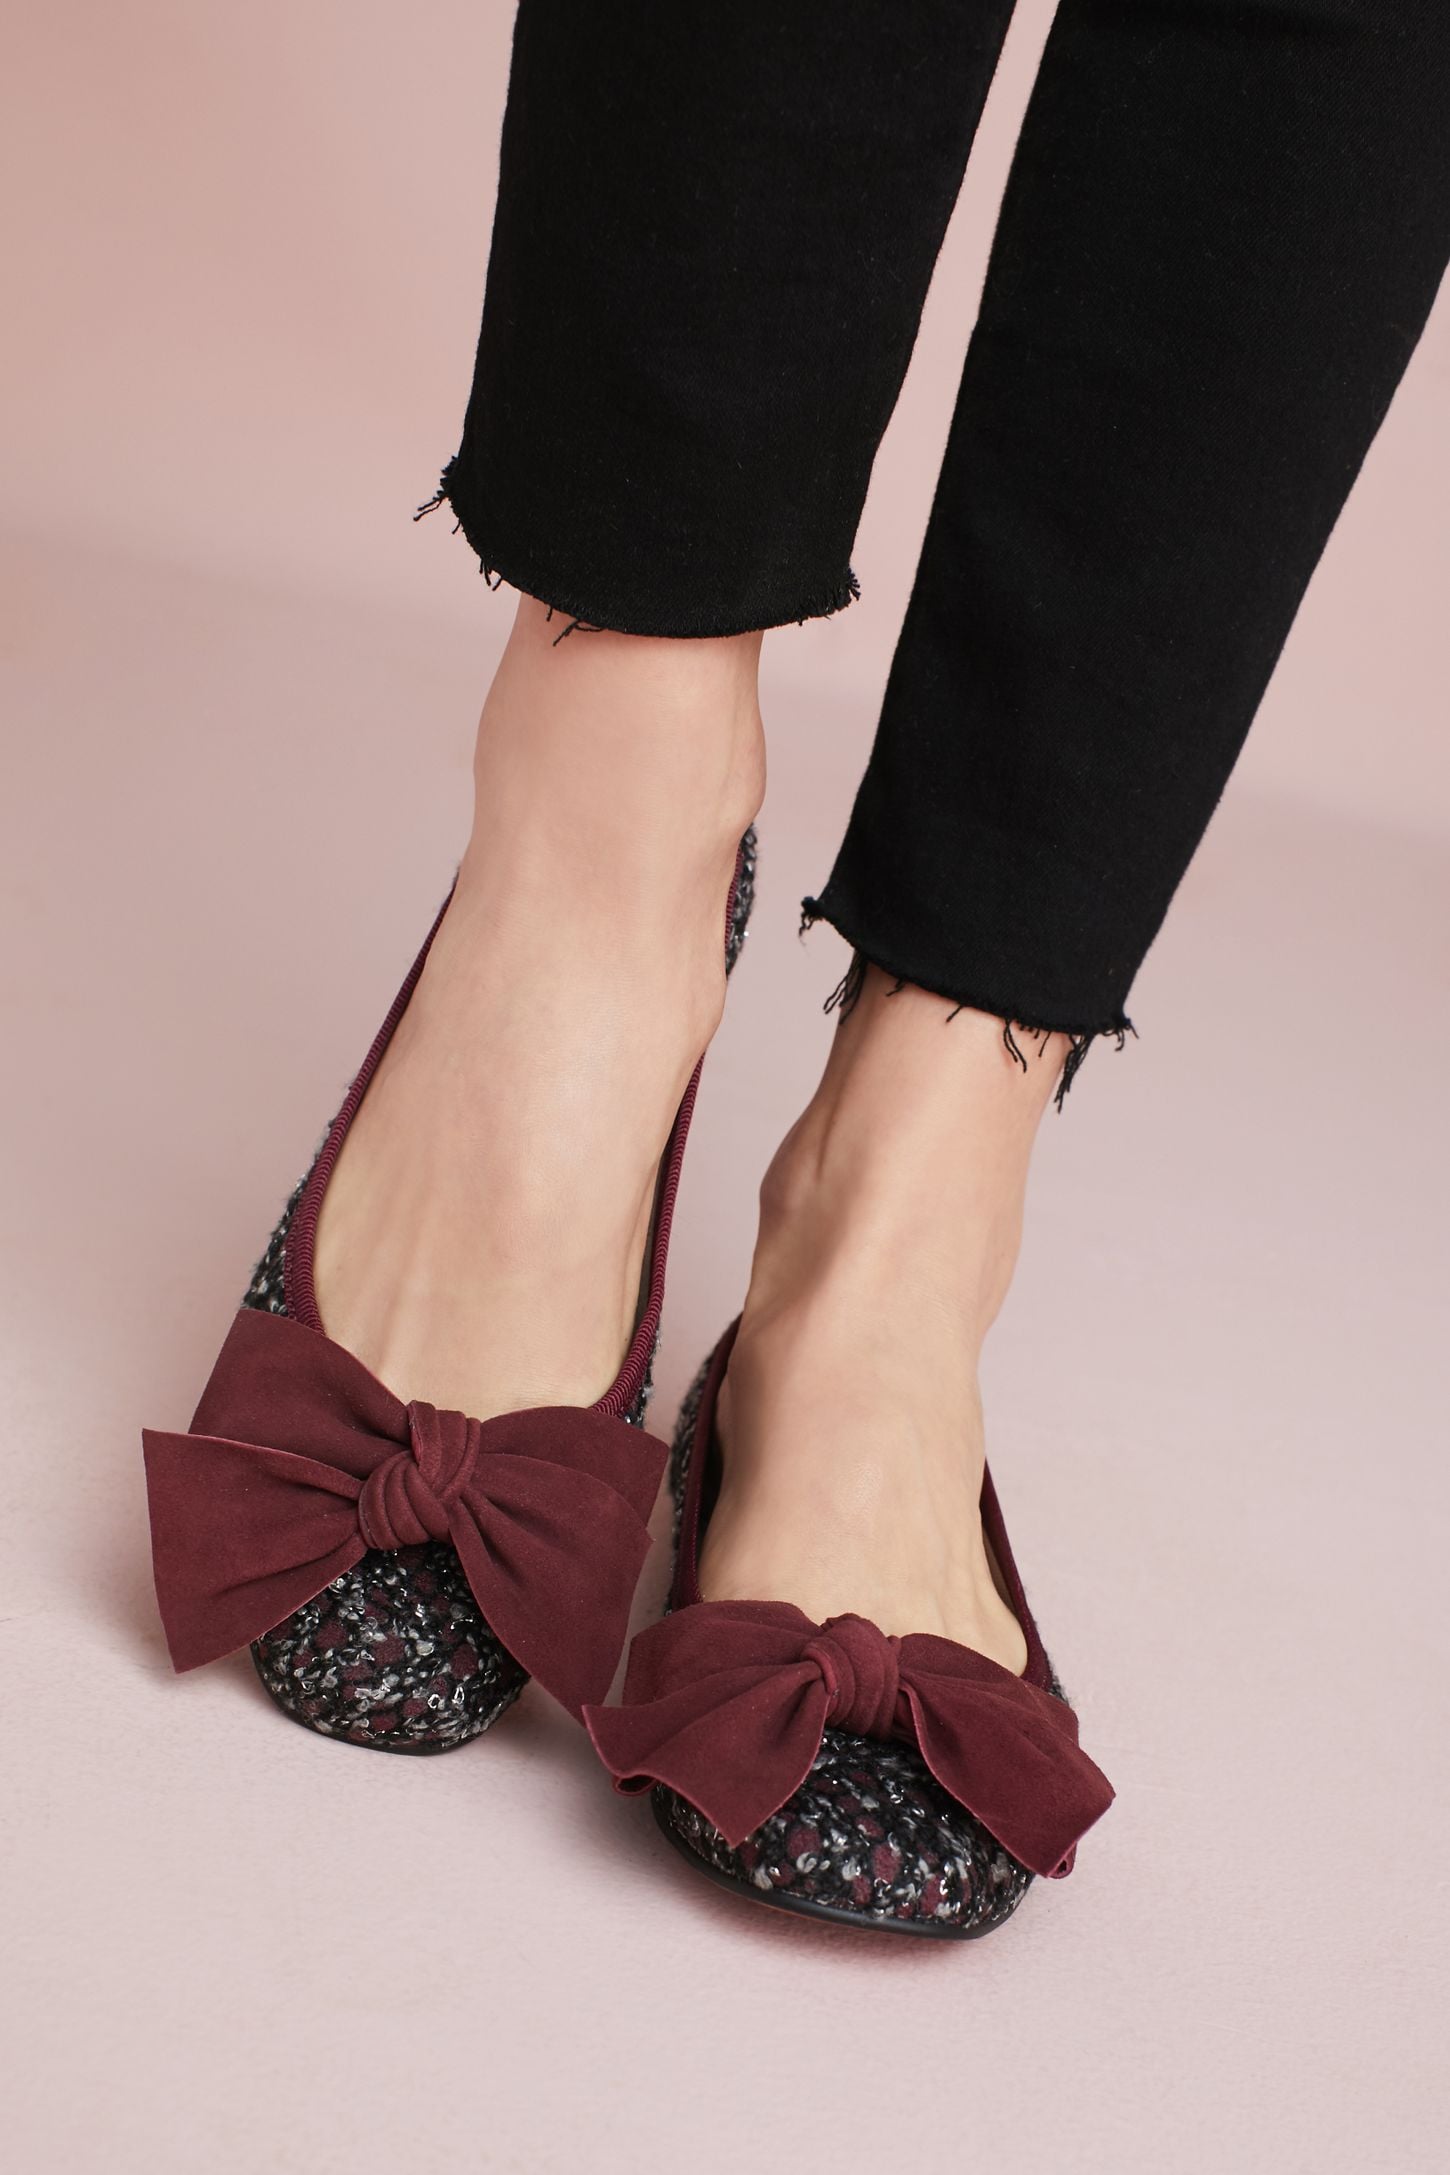 bisue ballerinas shoes